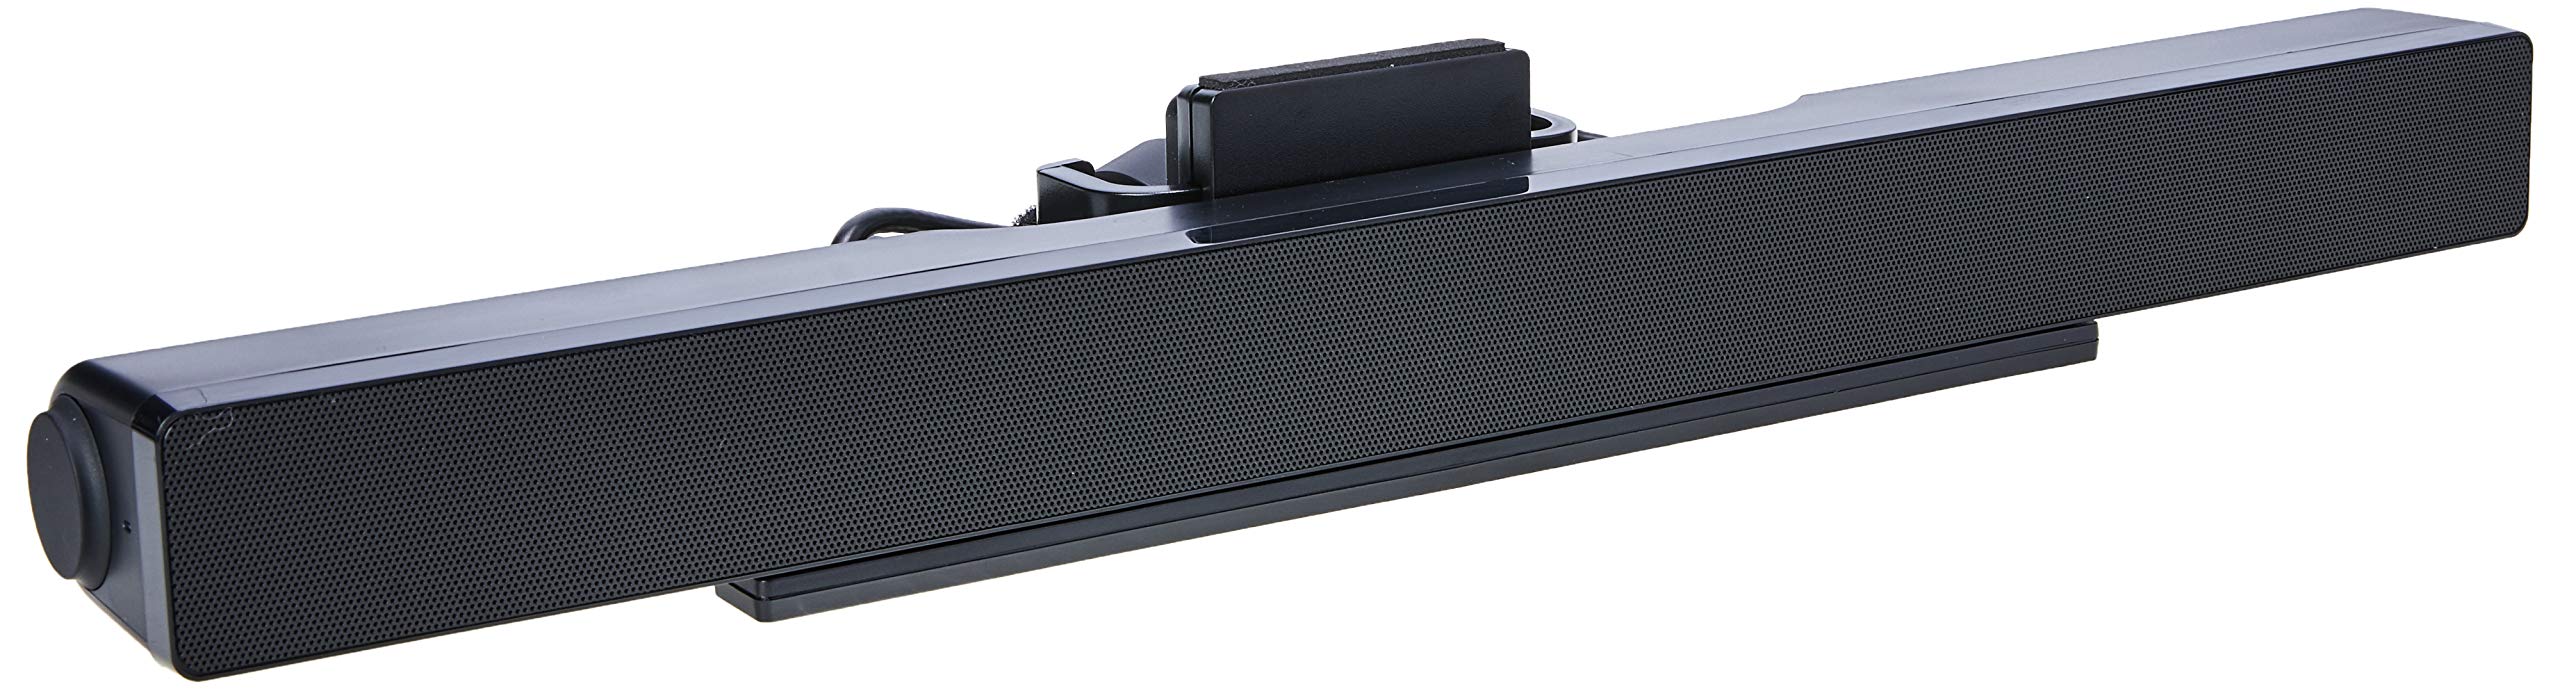 Dell AC511 USB Soundbar PC-Lautsprecher, schwarz